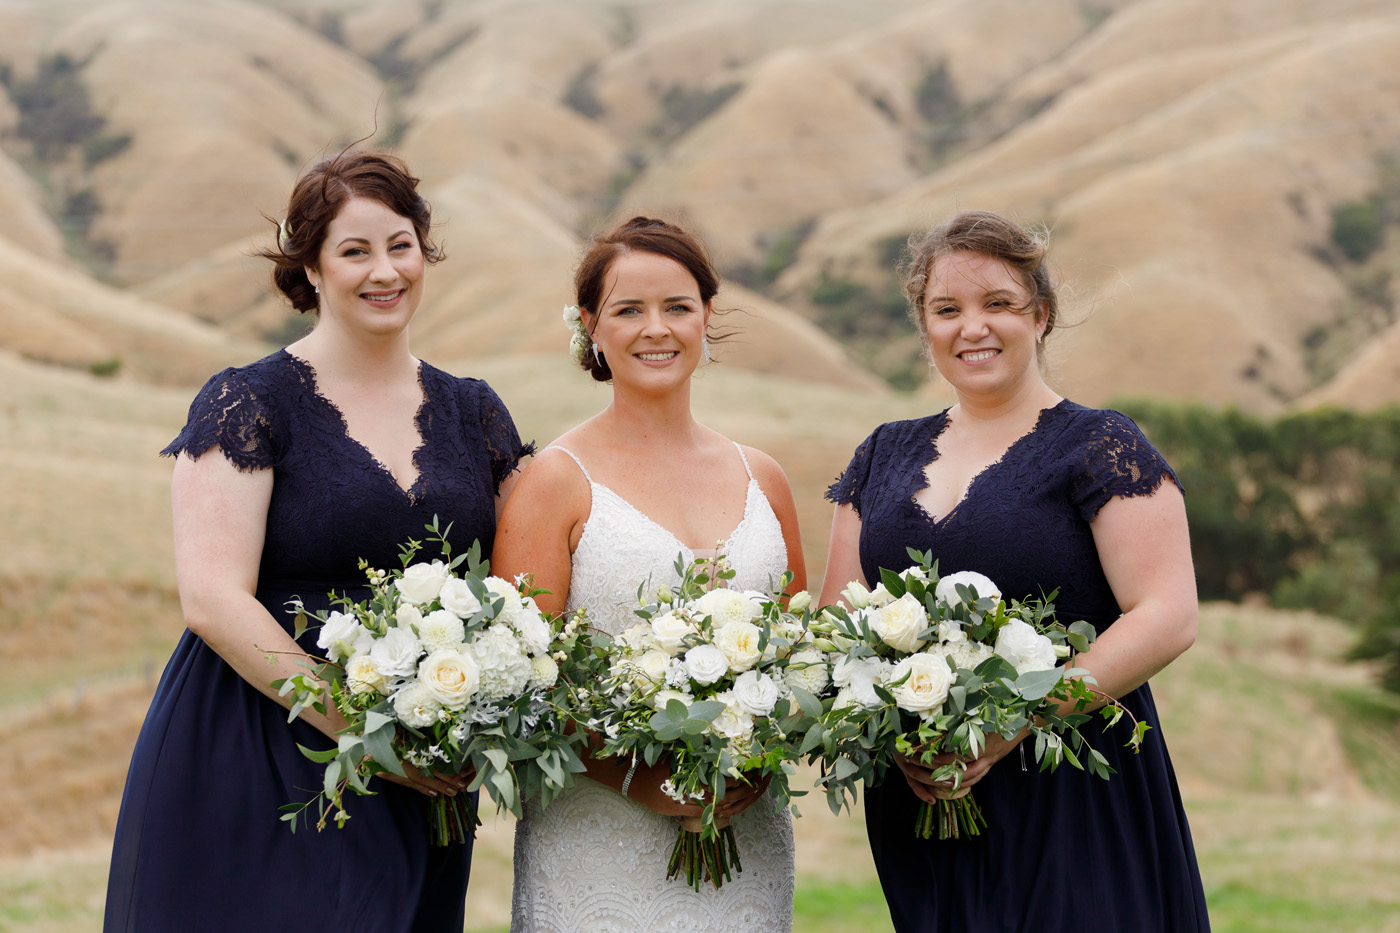 Danielle + Caylem | Raffaele Ciuca Real Bride | Real Wedding | New Zealand Wedding | Mietra by Maggie Sottero